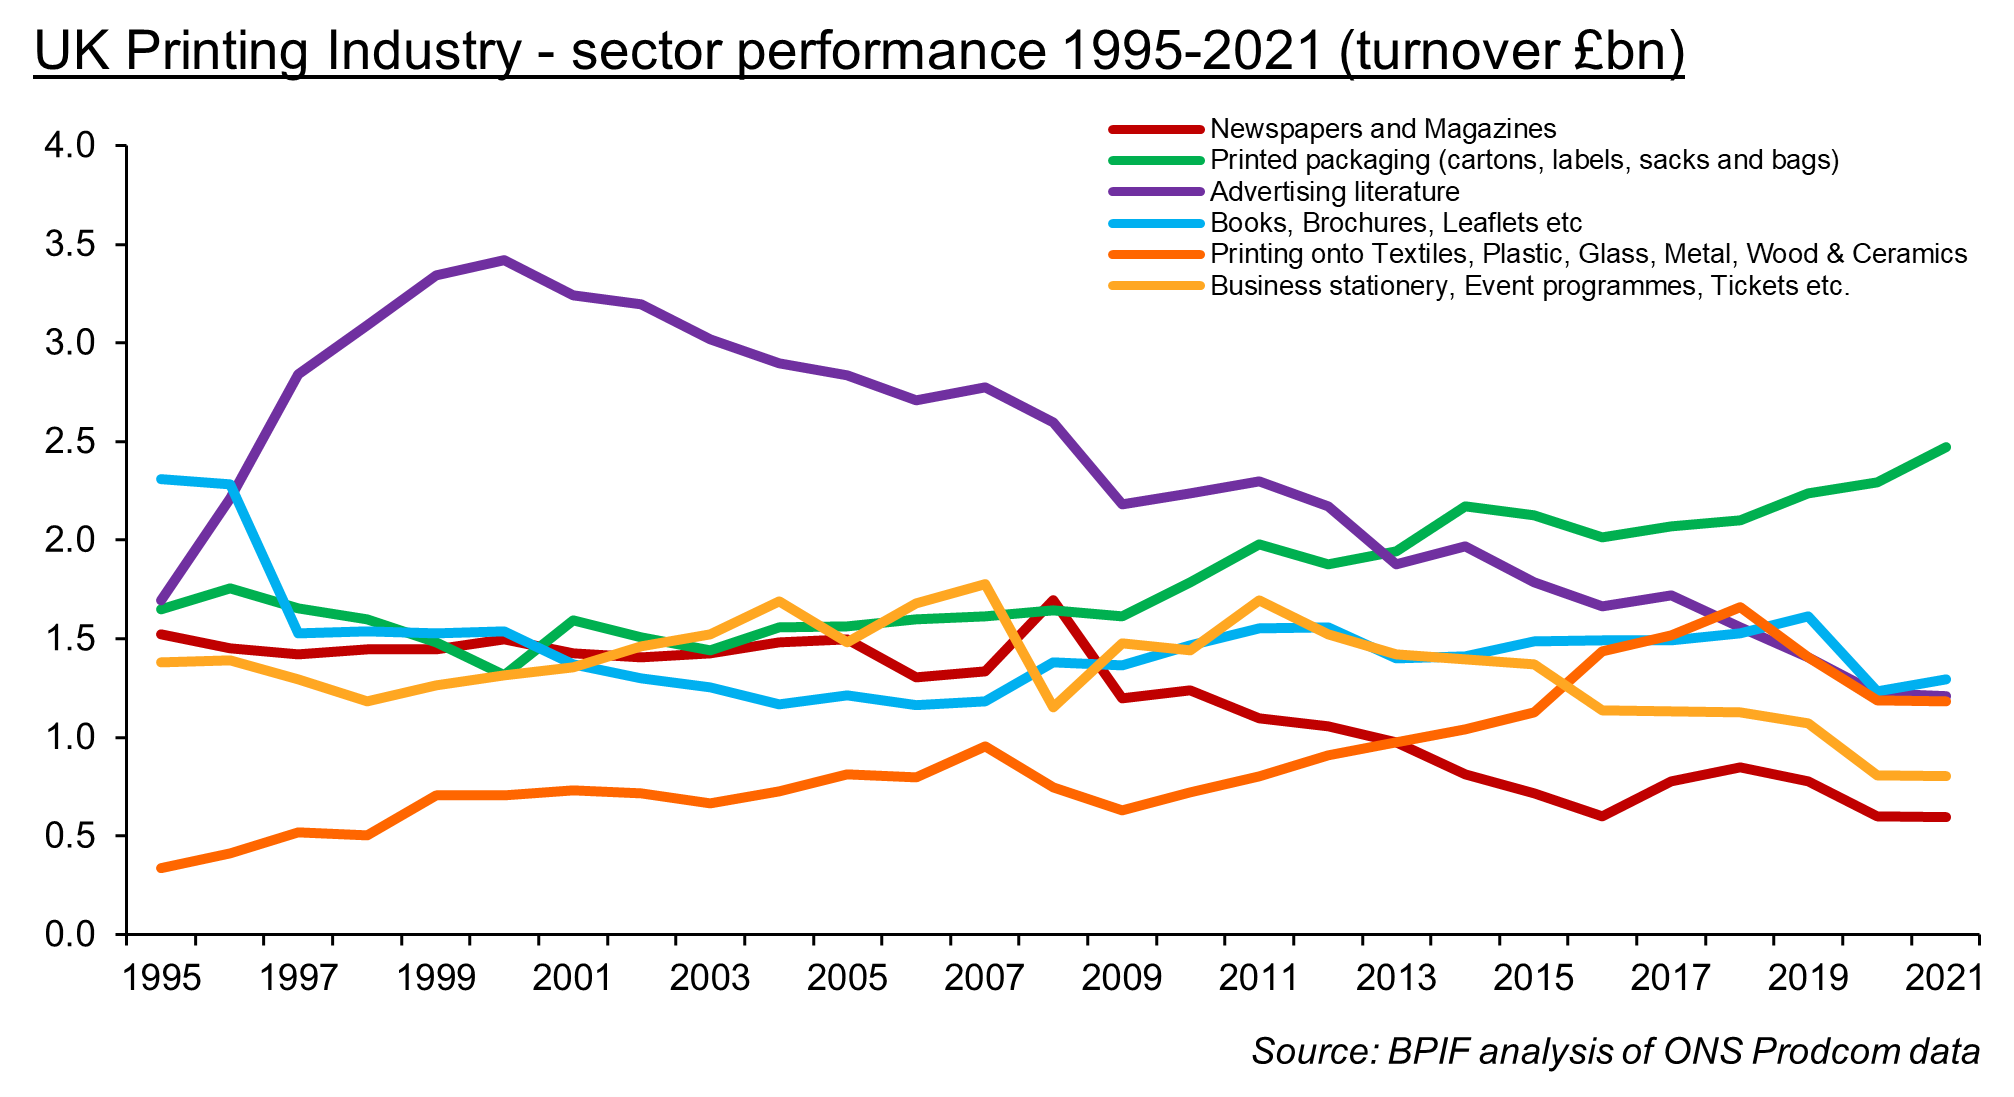 UK Printing - Sector Performance 1995-2021